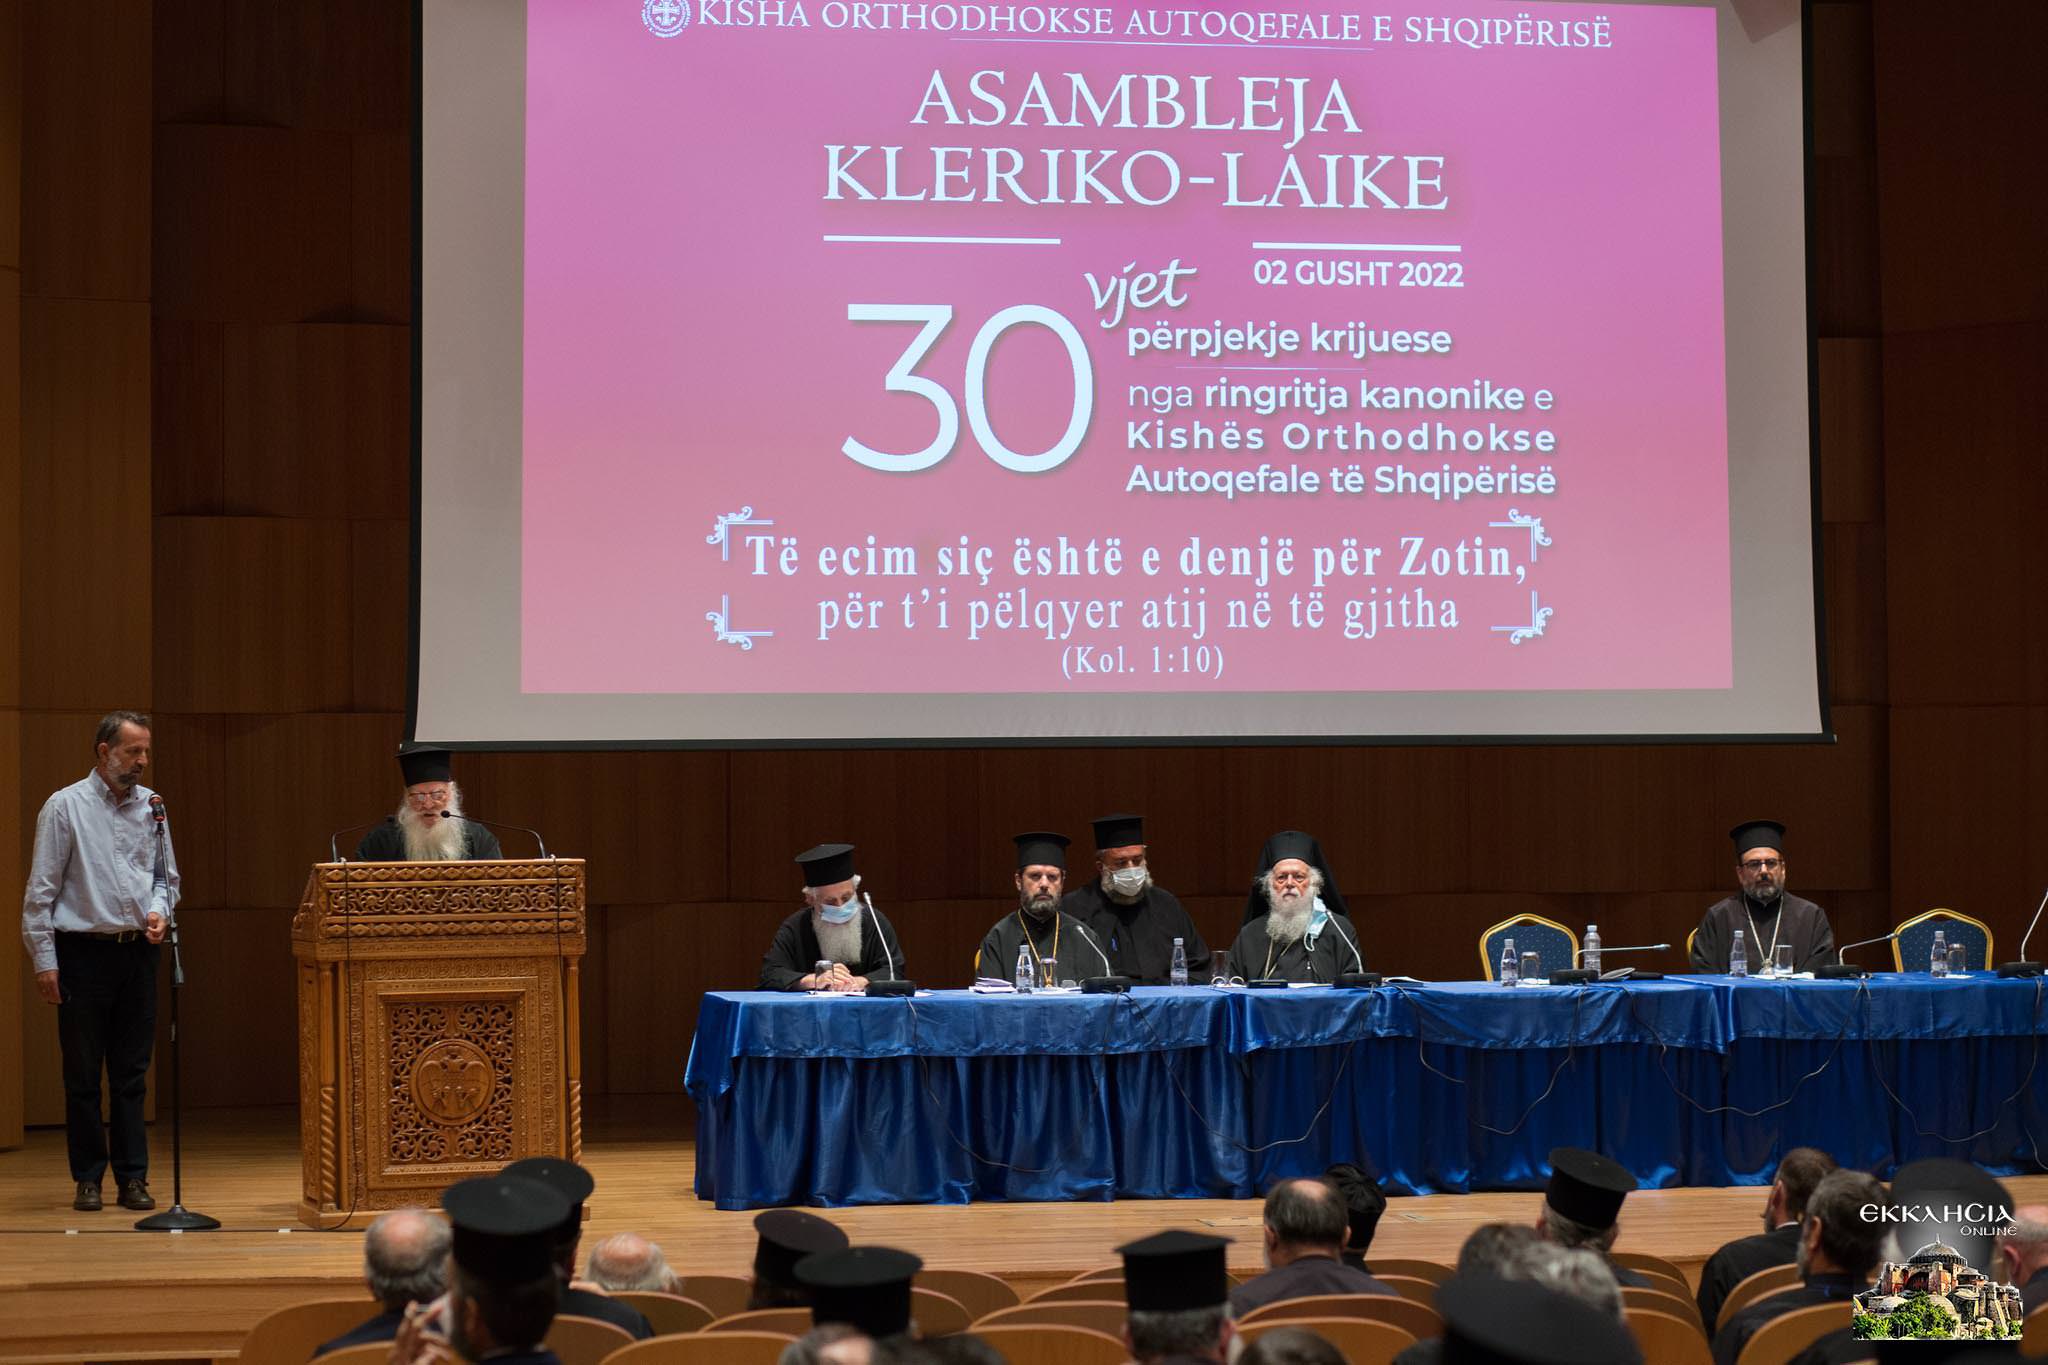 Hμέρα συμπλήρωσης τριών δεκαετιών από την ενθρόνιση του Αρχιεπισκόπου Αλβανίας Αναστασίου